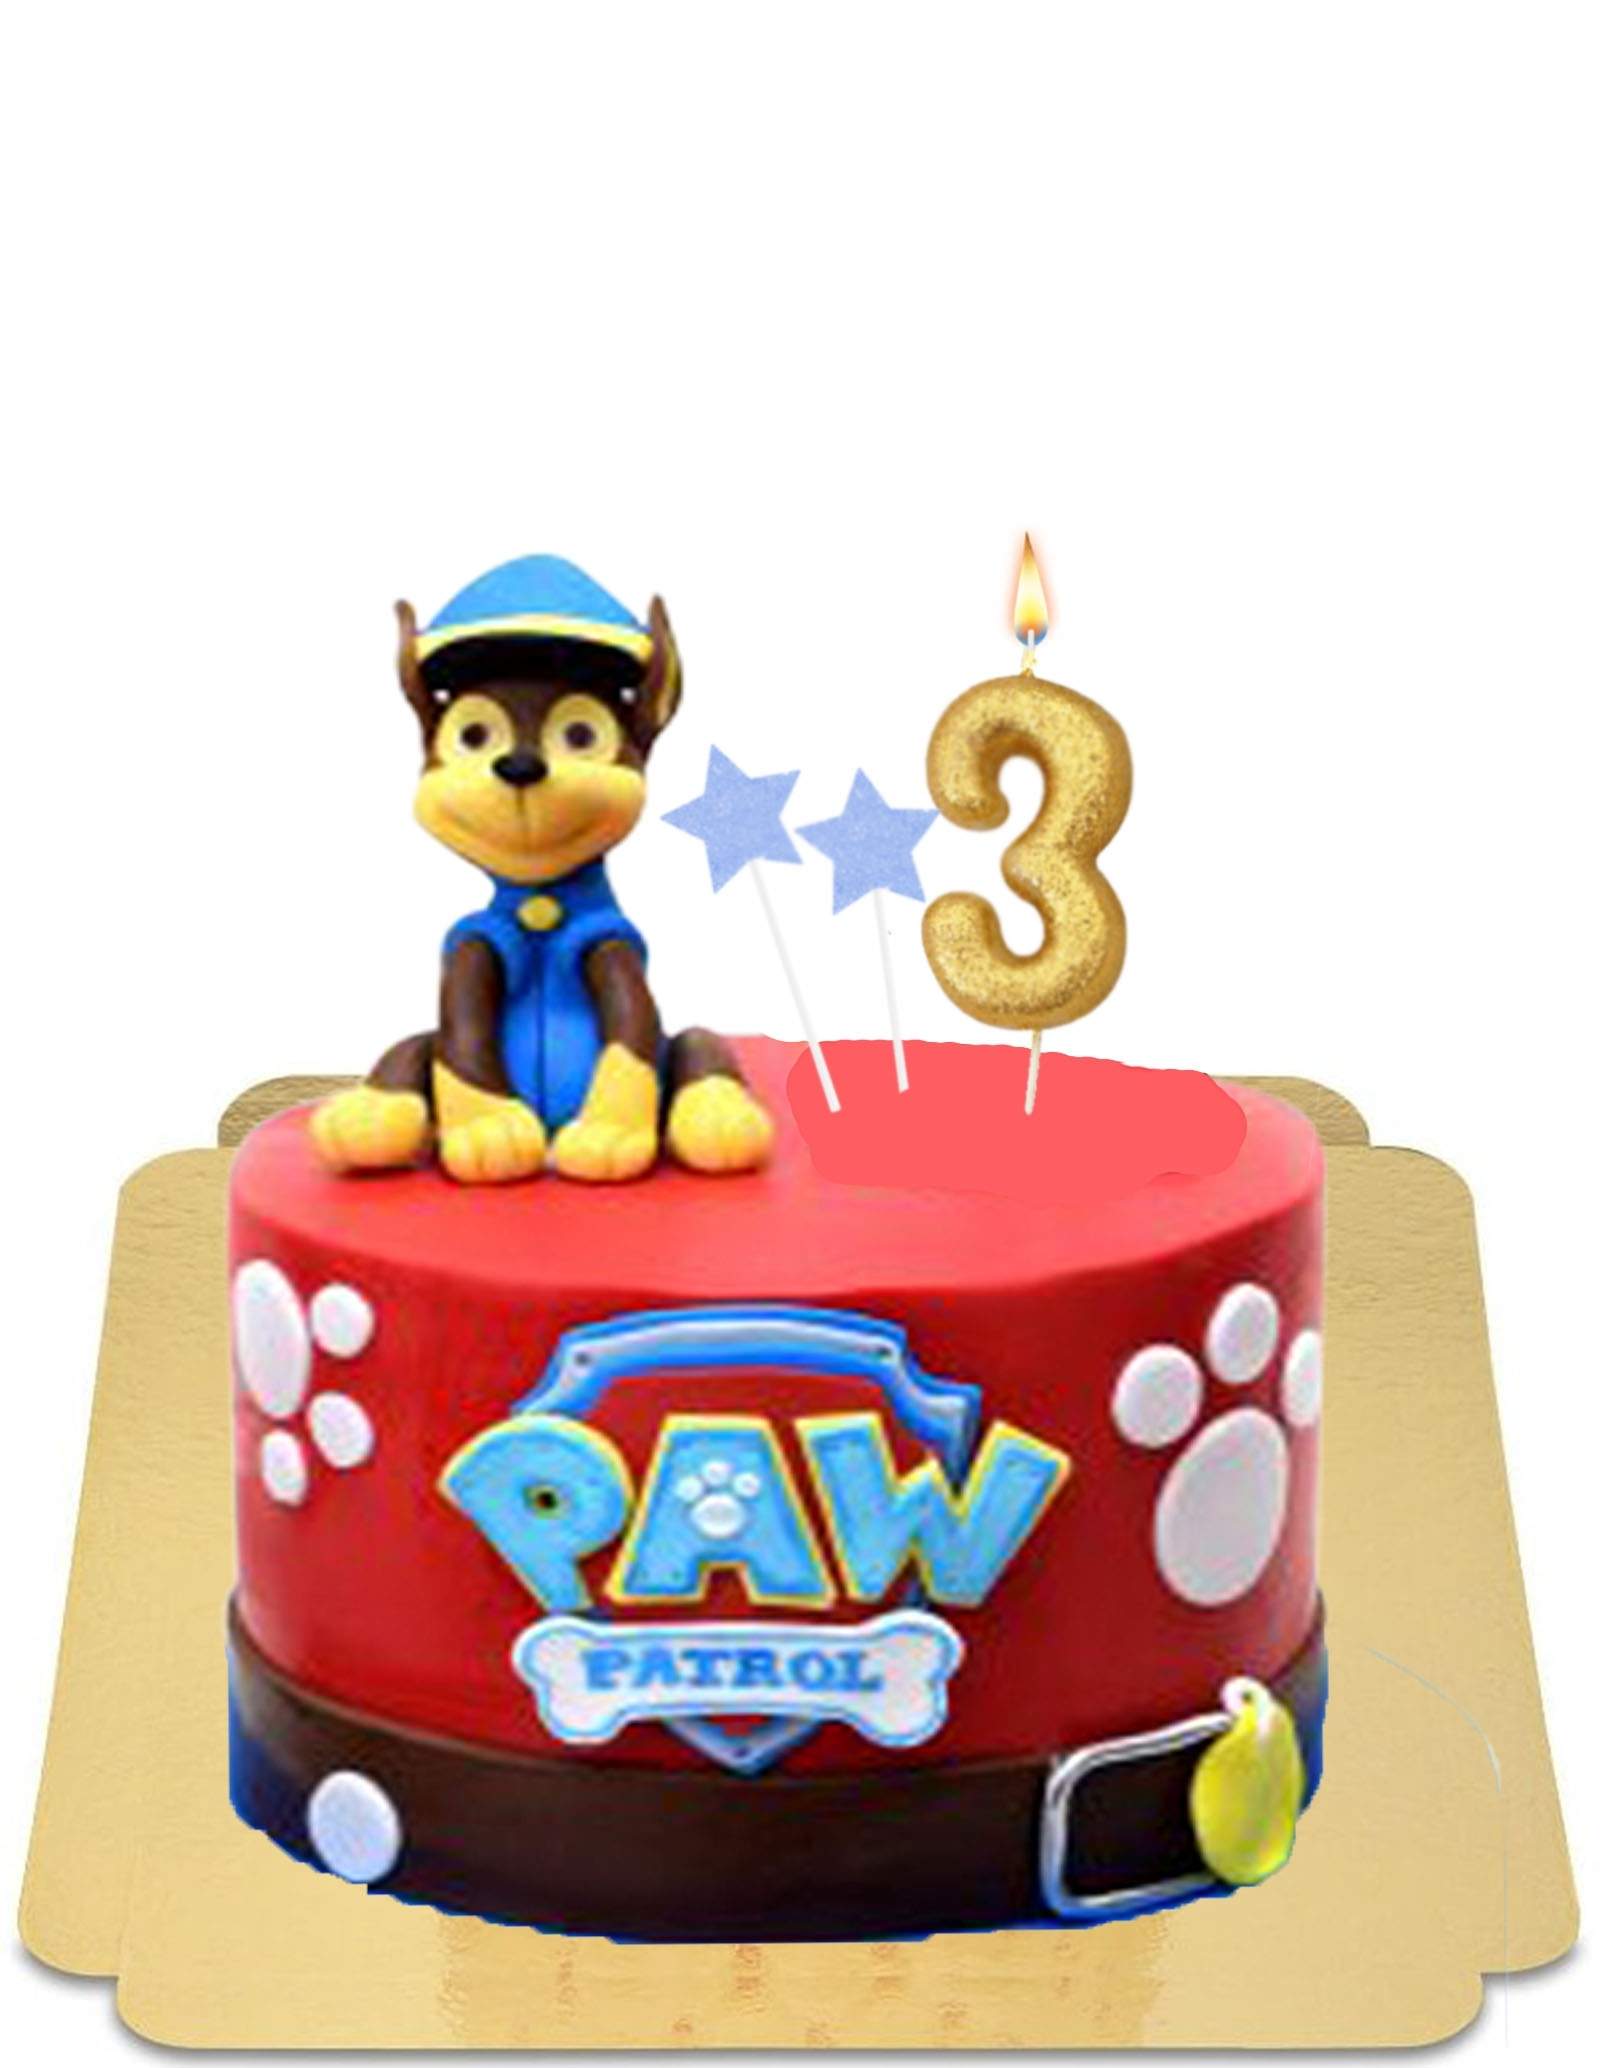 Torta decorada de Paw Patrol - La Patrulla Canina - Tan Dulce